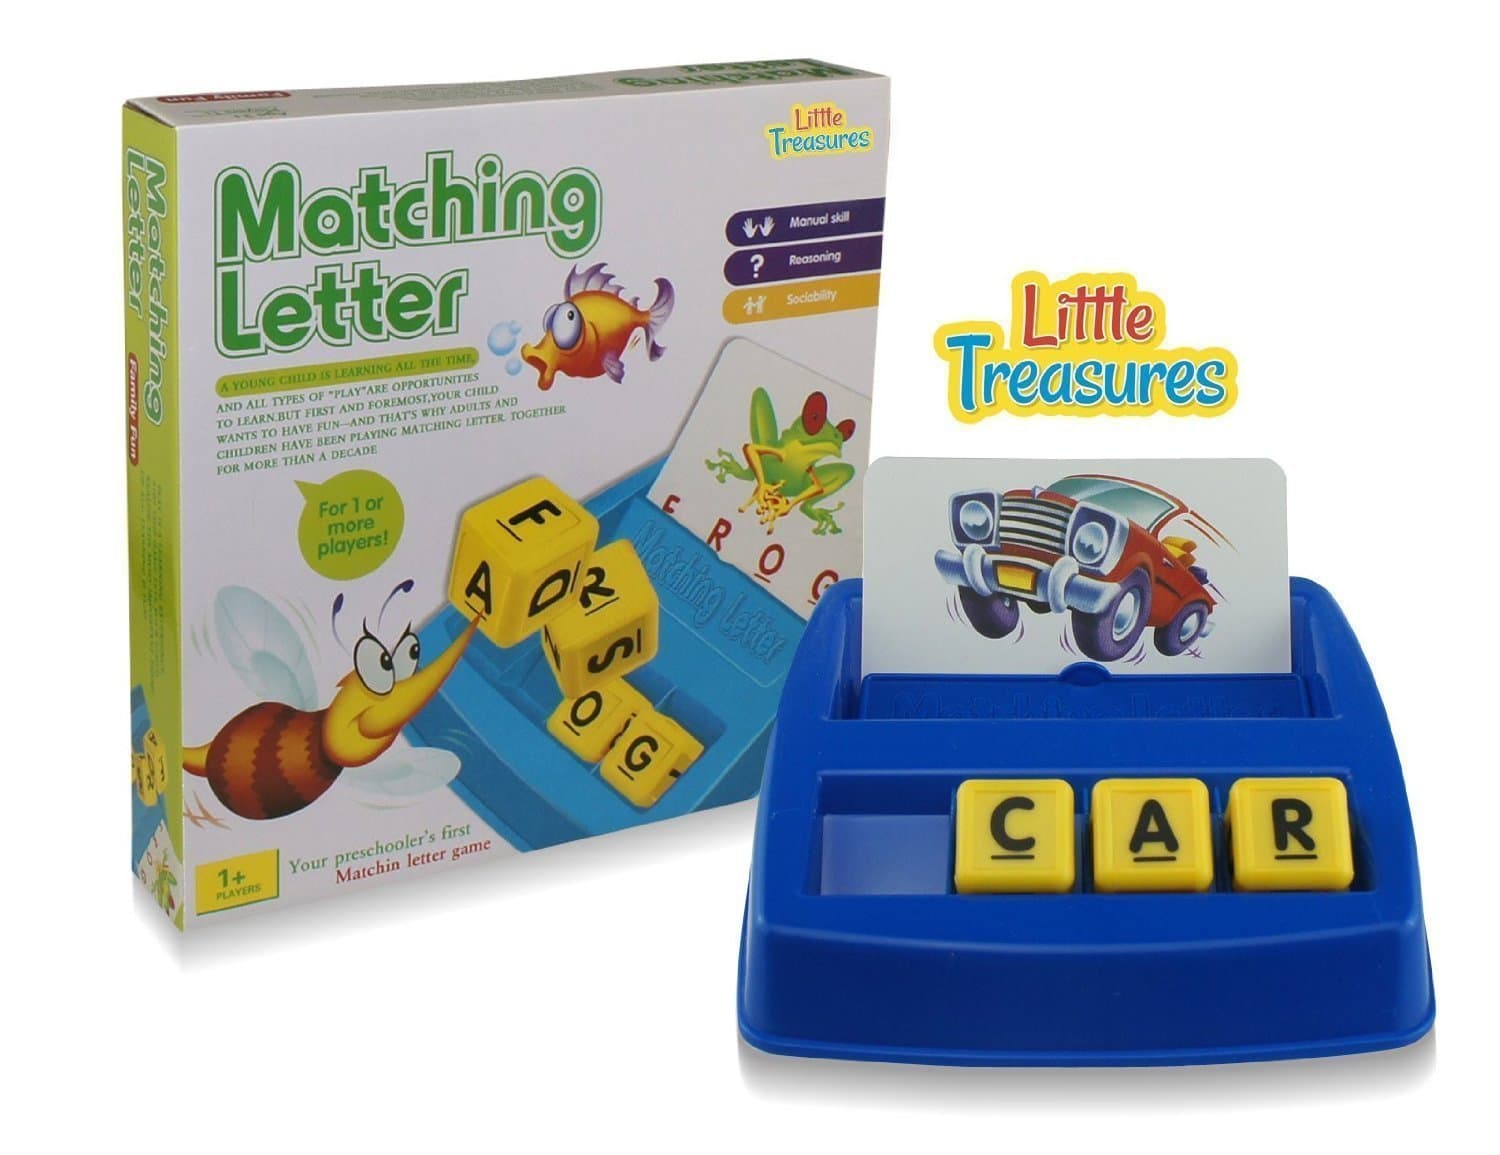 DEAL ALERT: Little Treasures Matching Letter Game – 64% off!